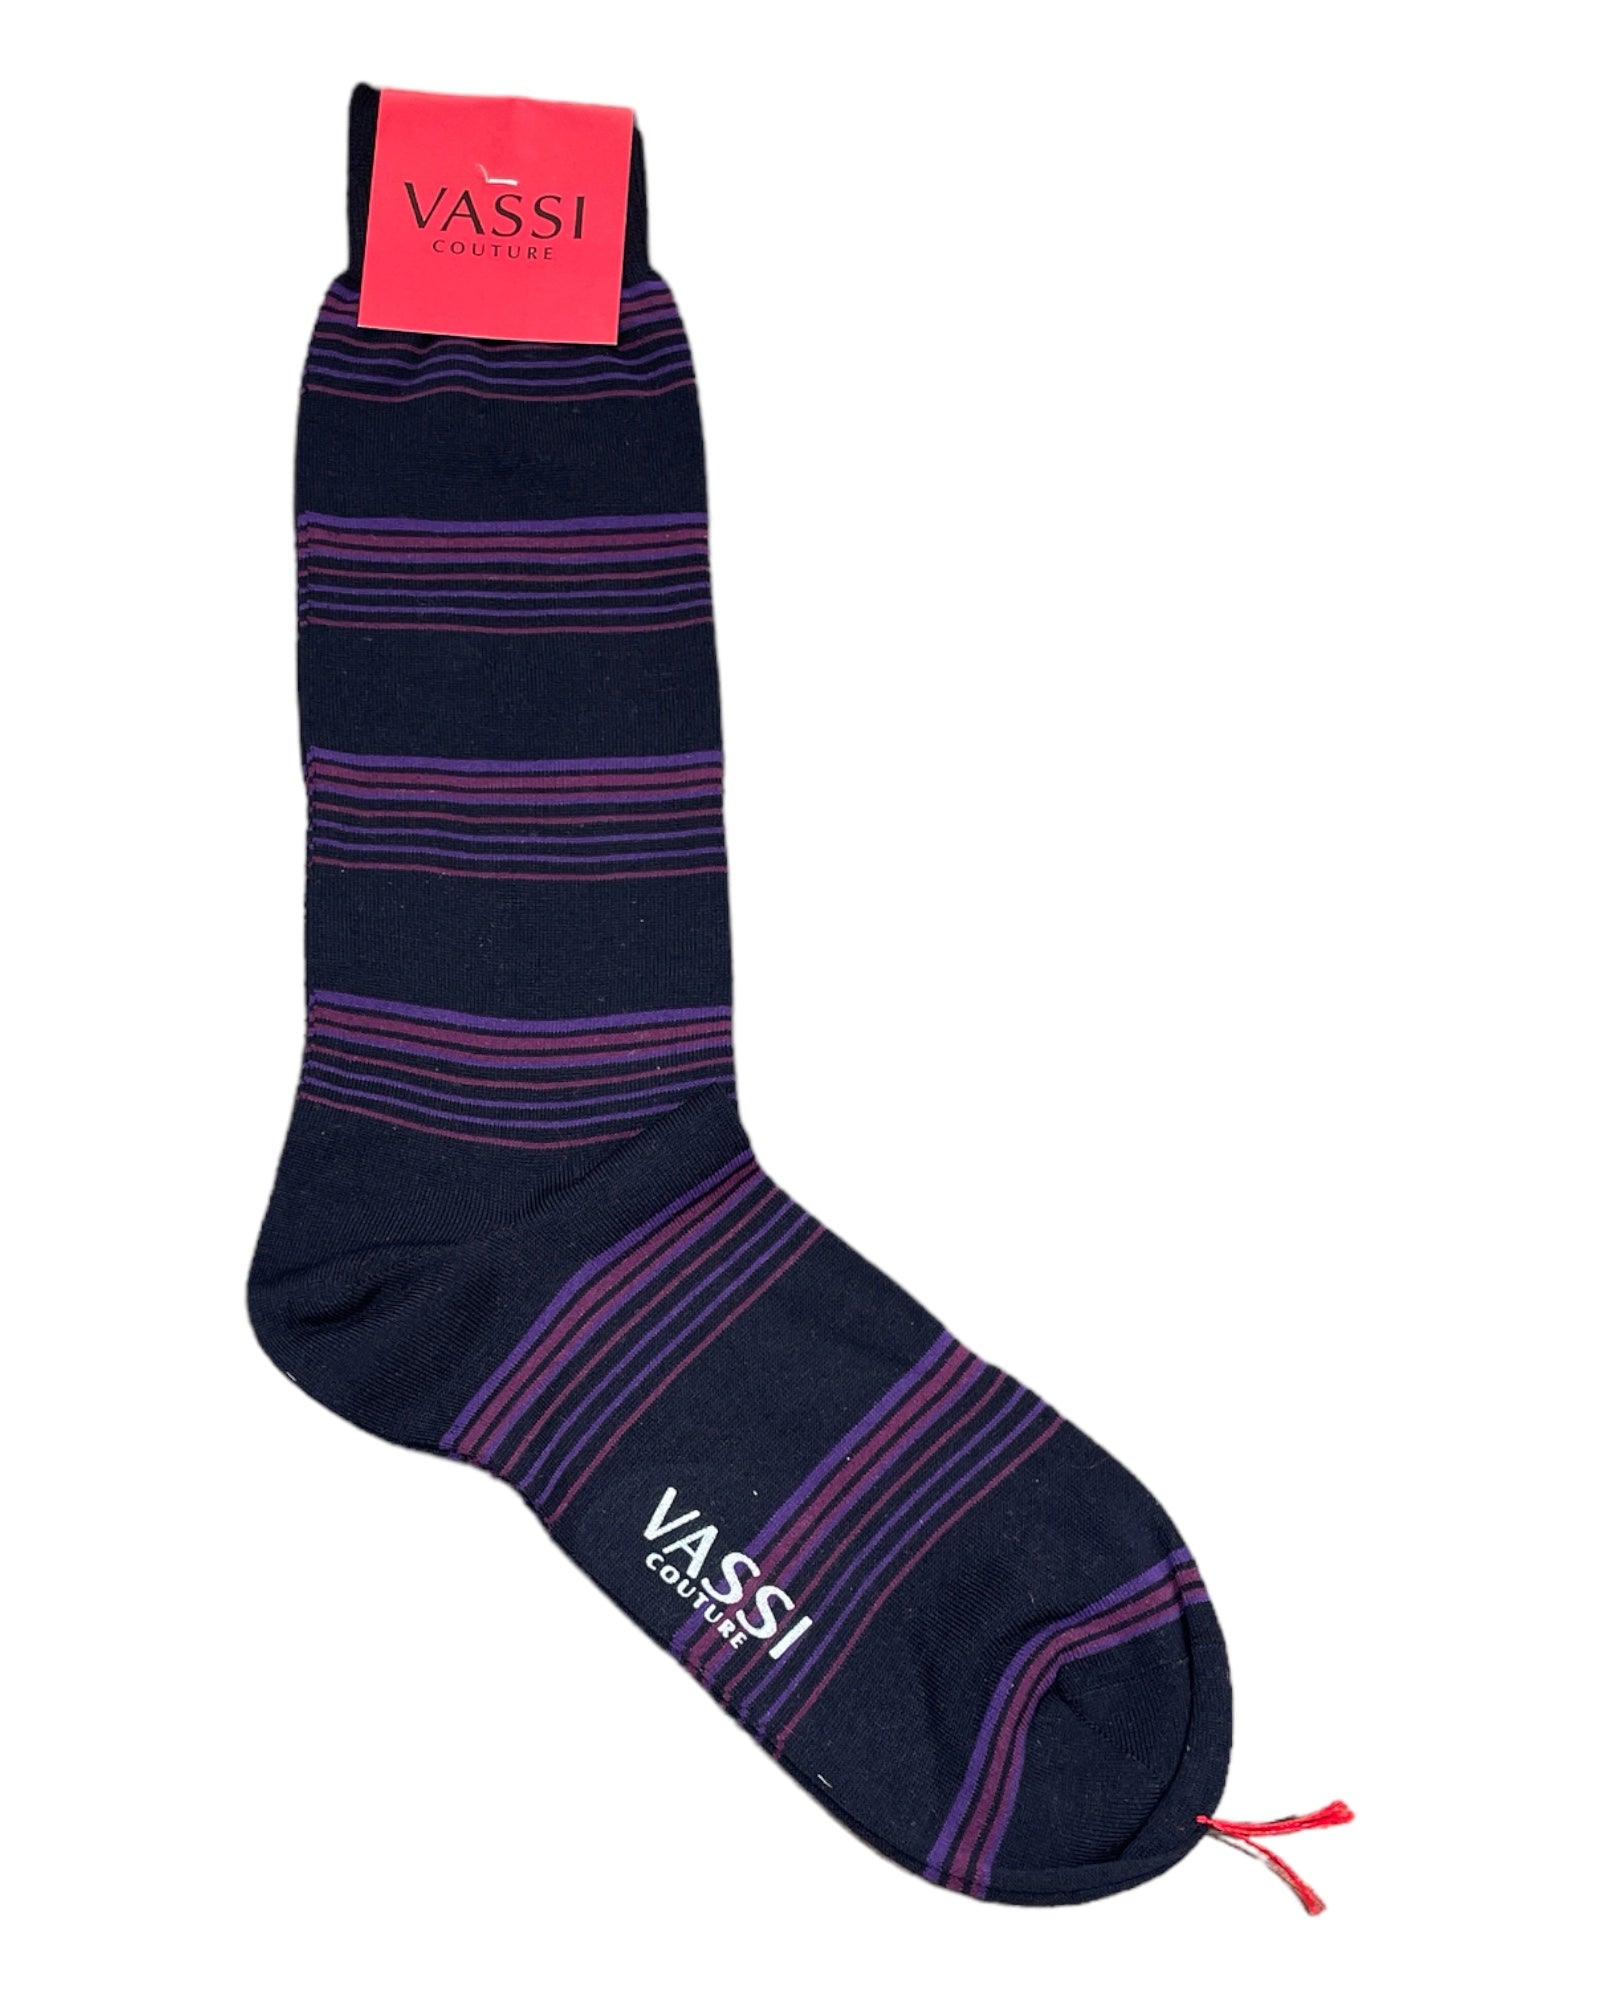 Navy with Purple Horizontal Stripes Socks